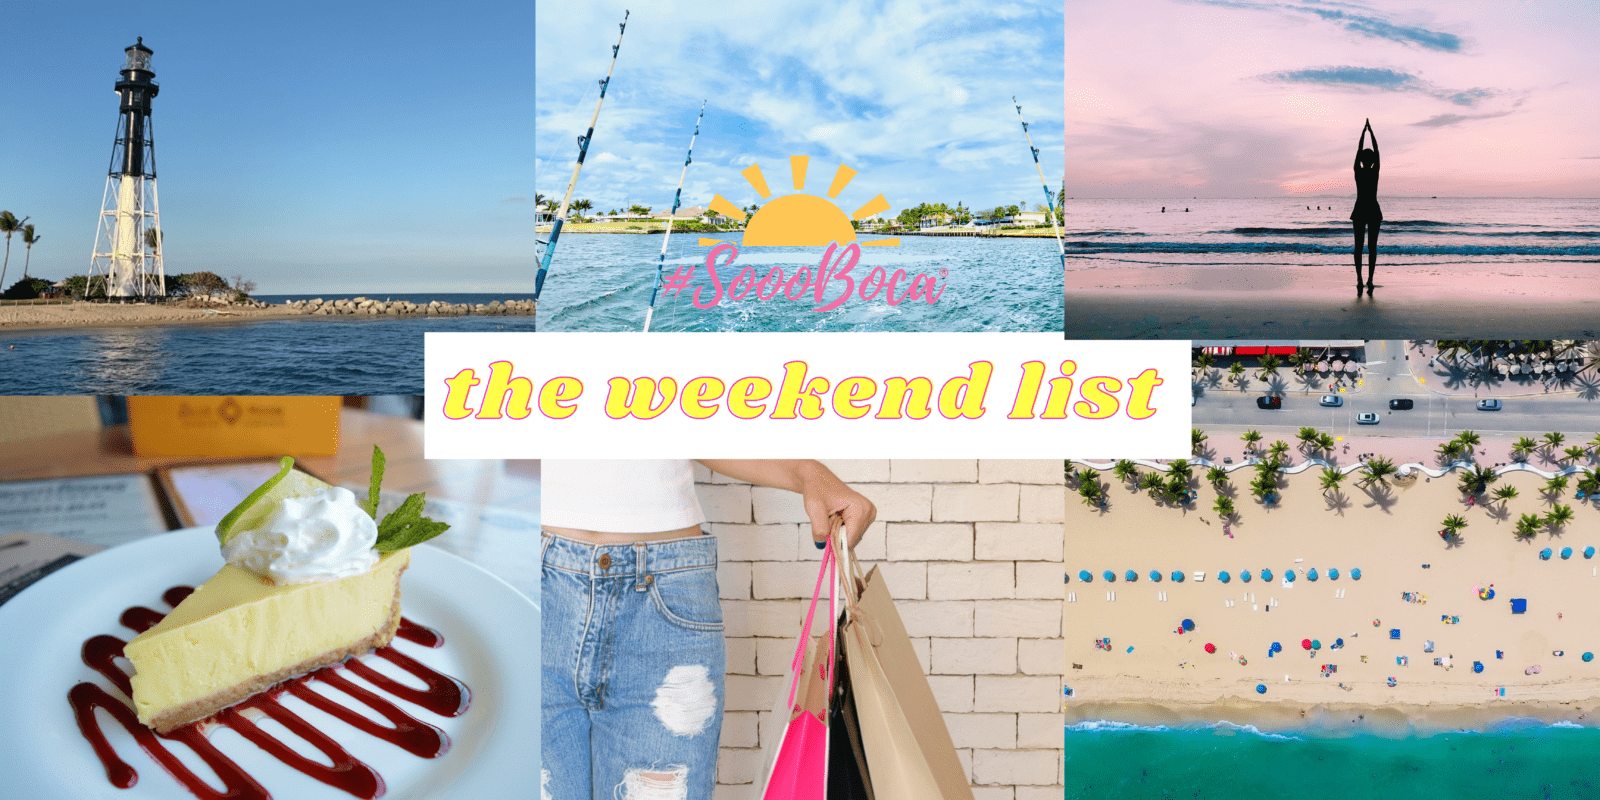 The Weekend List